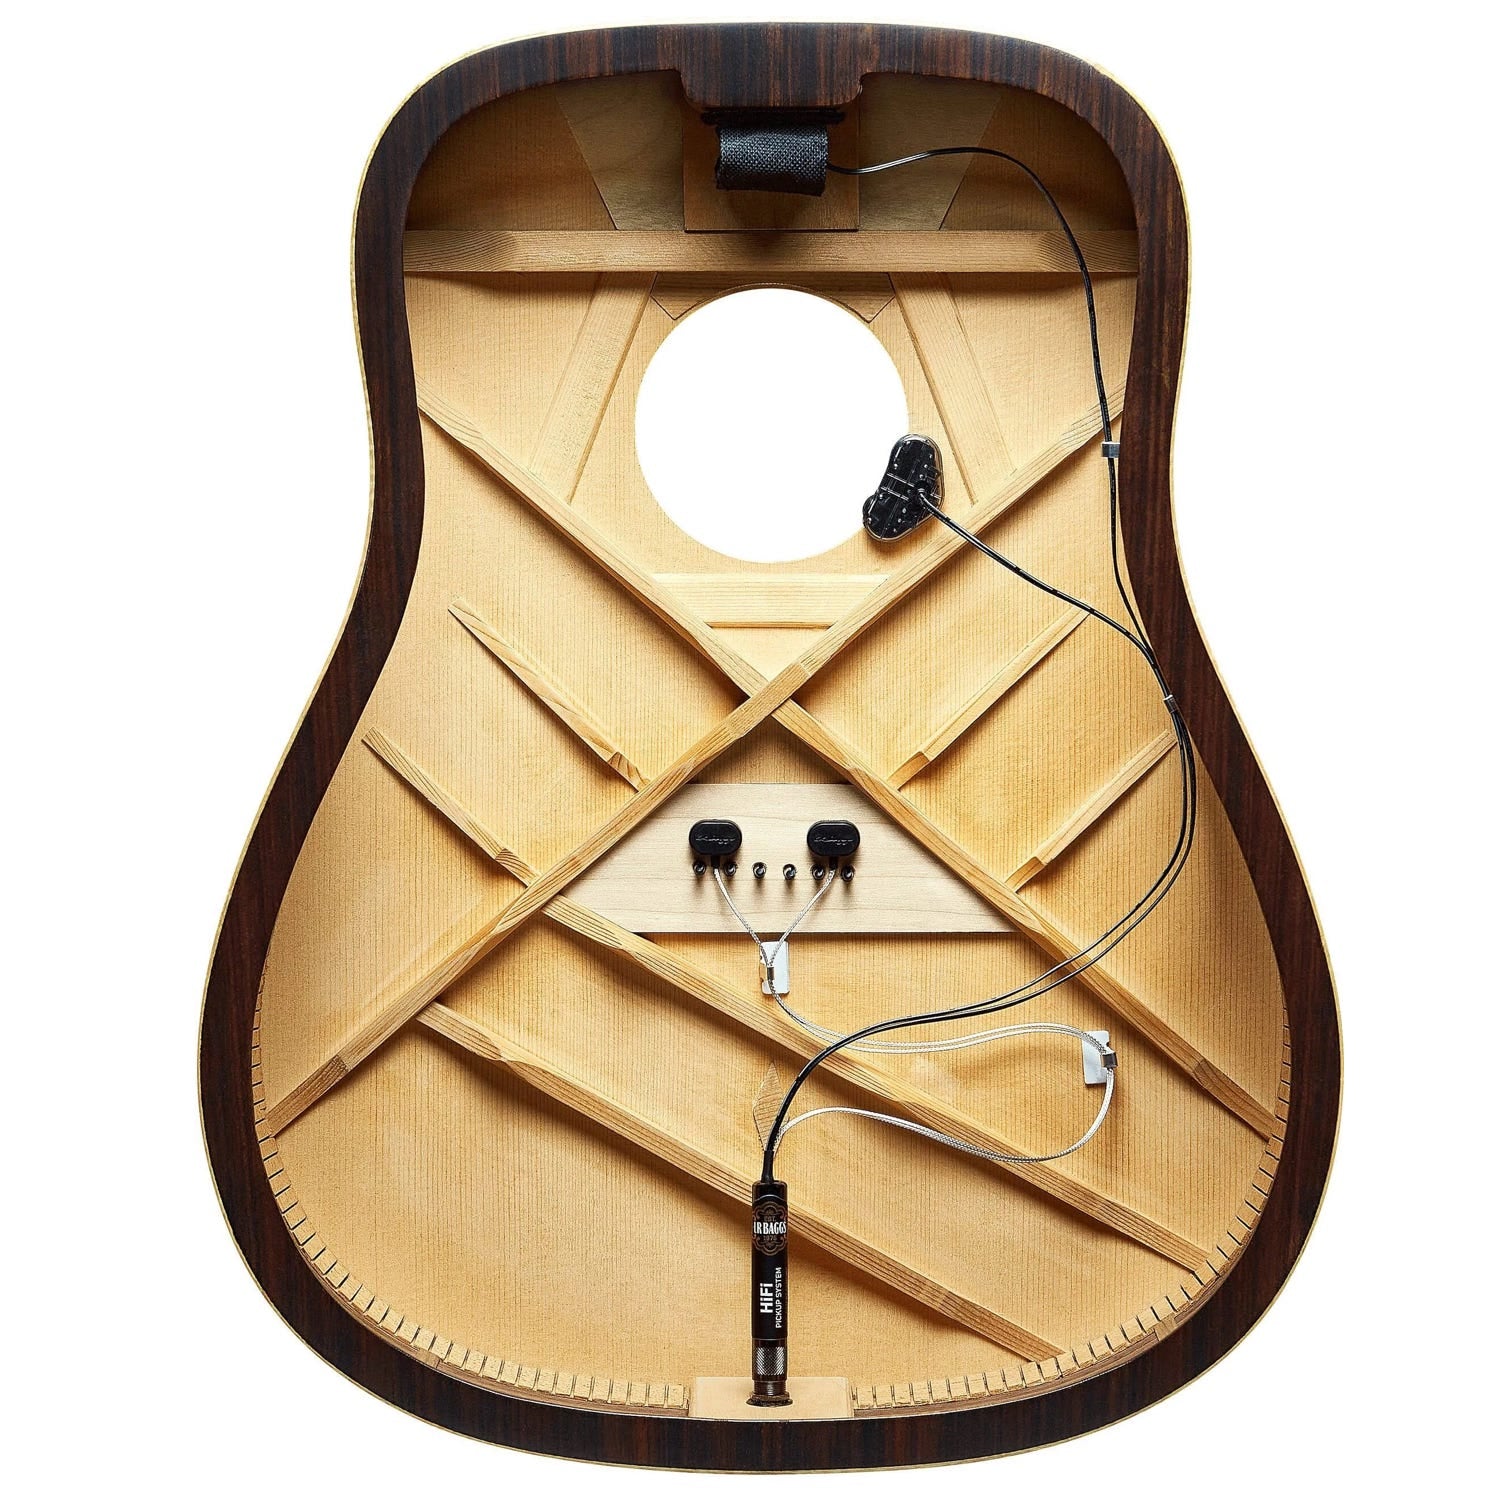 LR Baggs HiFi High-Fidelity Acoustic Guitar Bridge Plate Pickup System